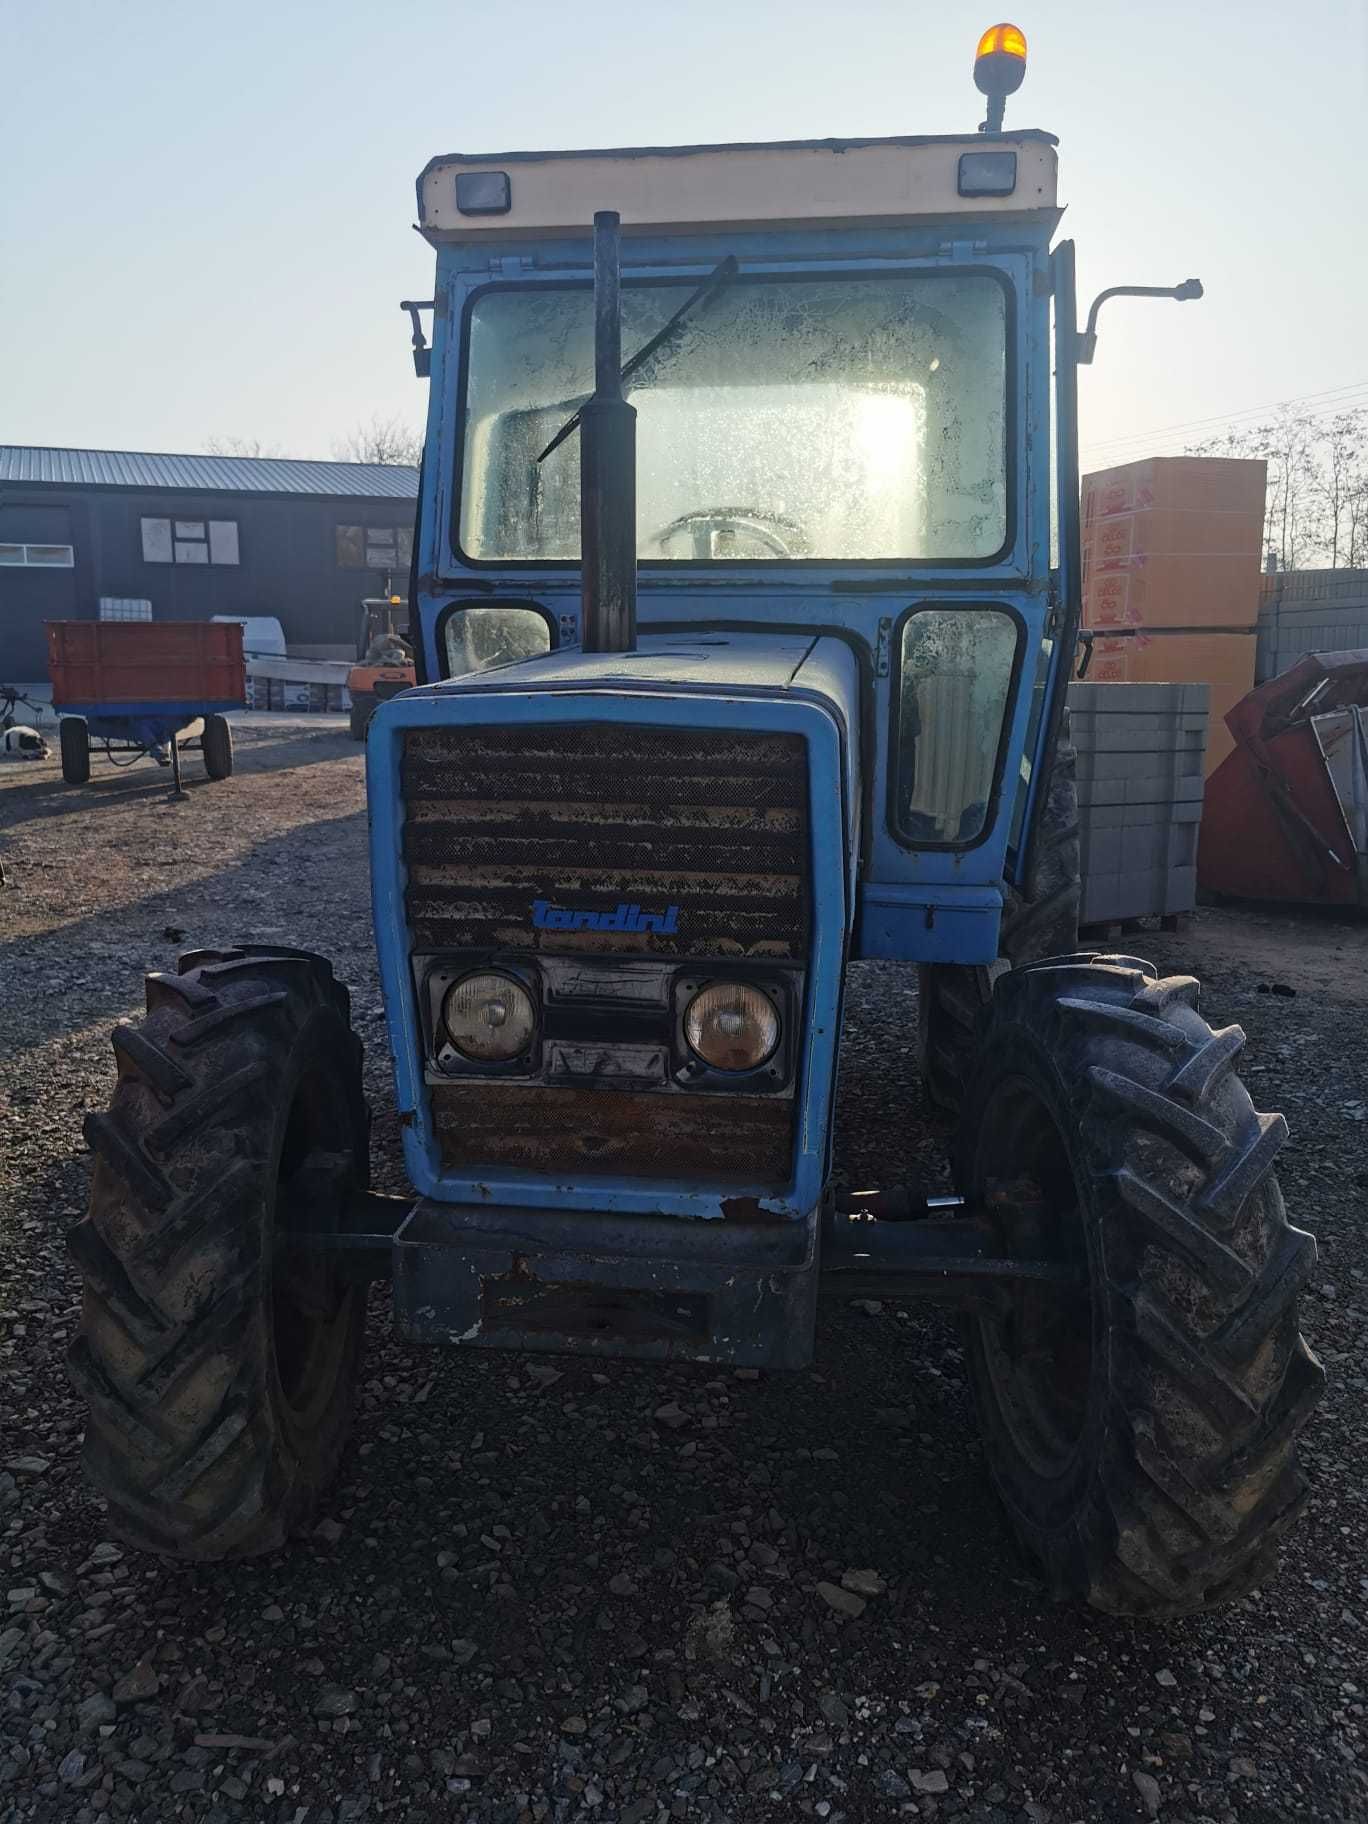 Tractor Fiat 666